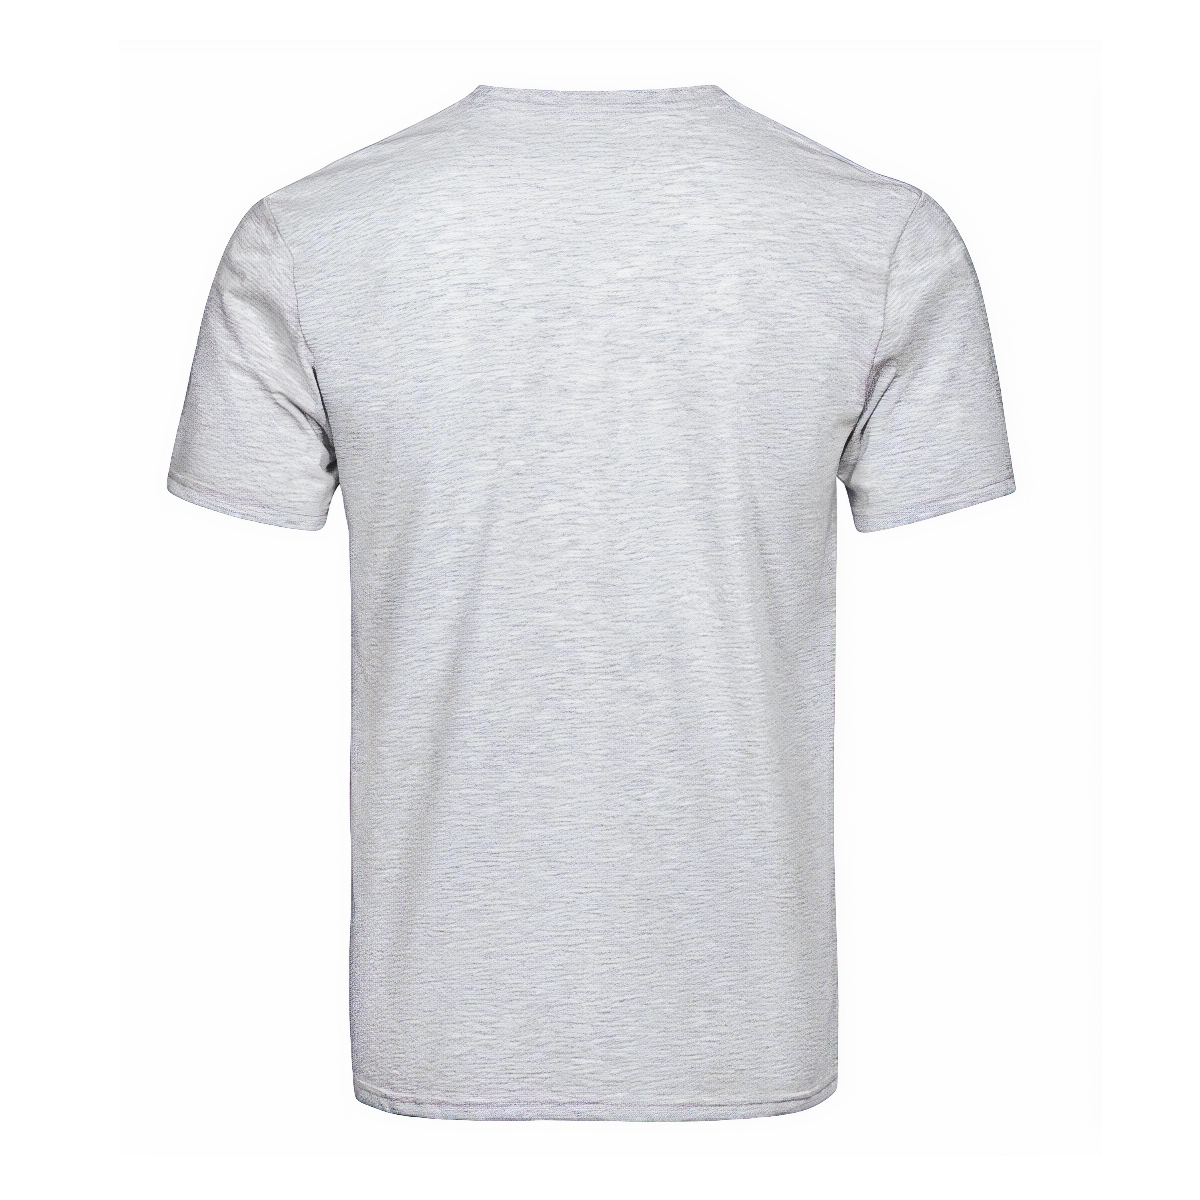 Straiton Tartan Crest T-shirt - I'm not yelling style